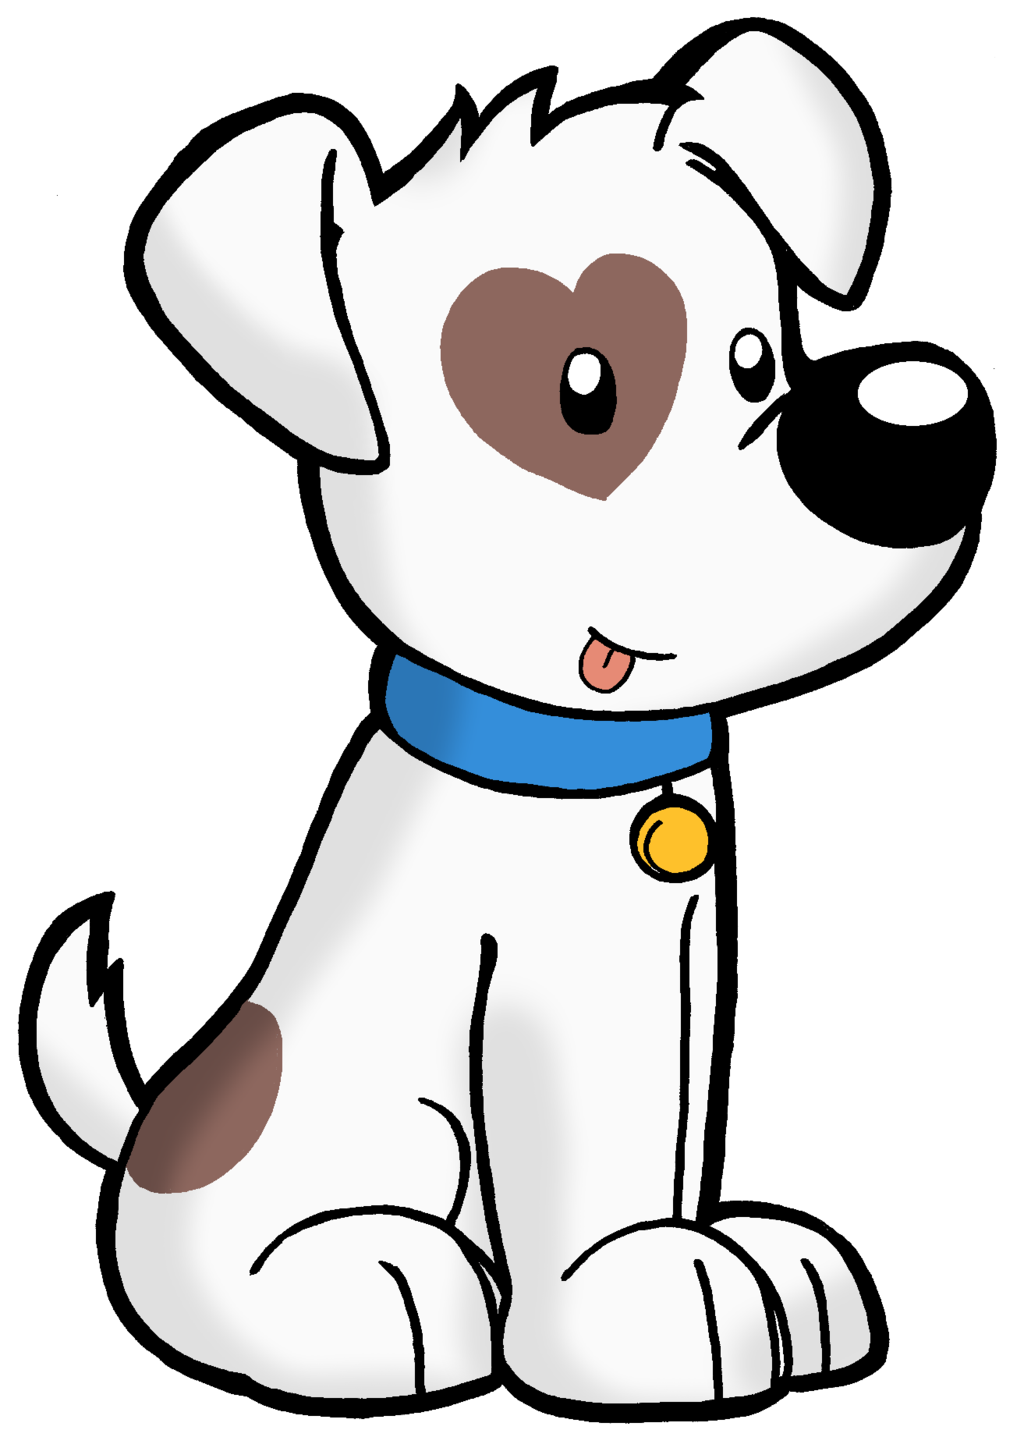 Free Cartoon Dog Png, Download Free Cartoon Dog Png png